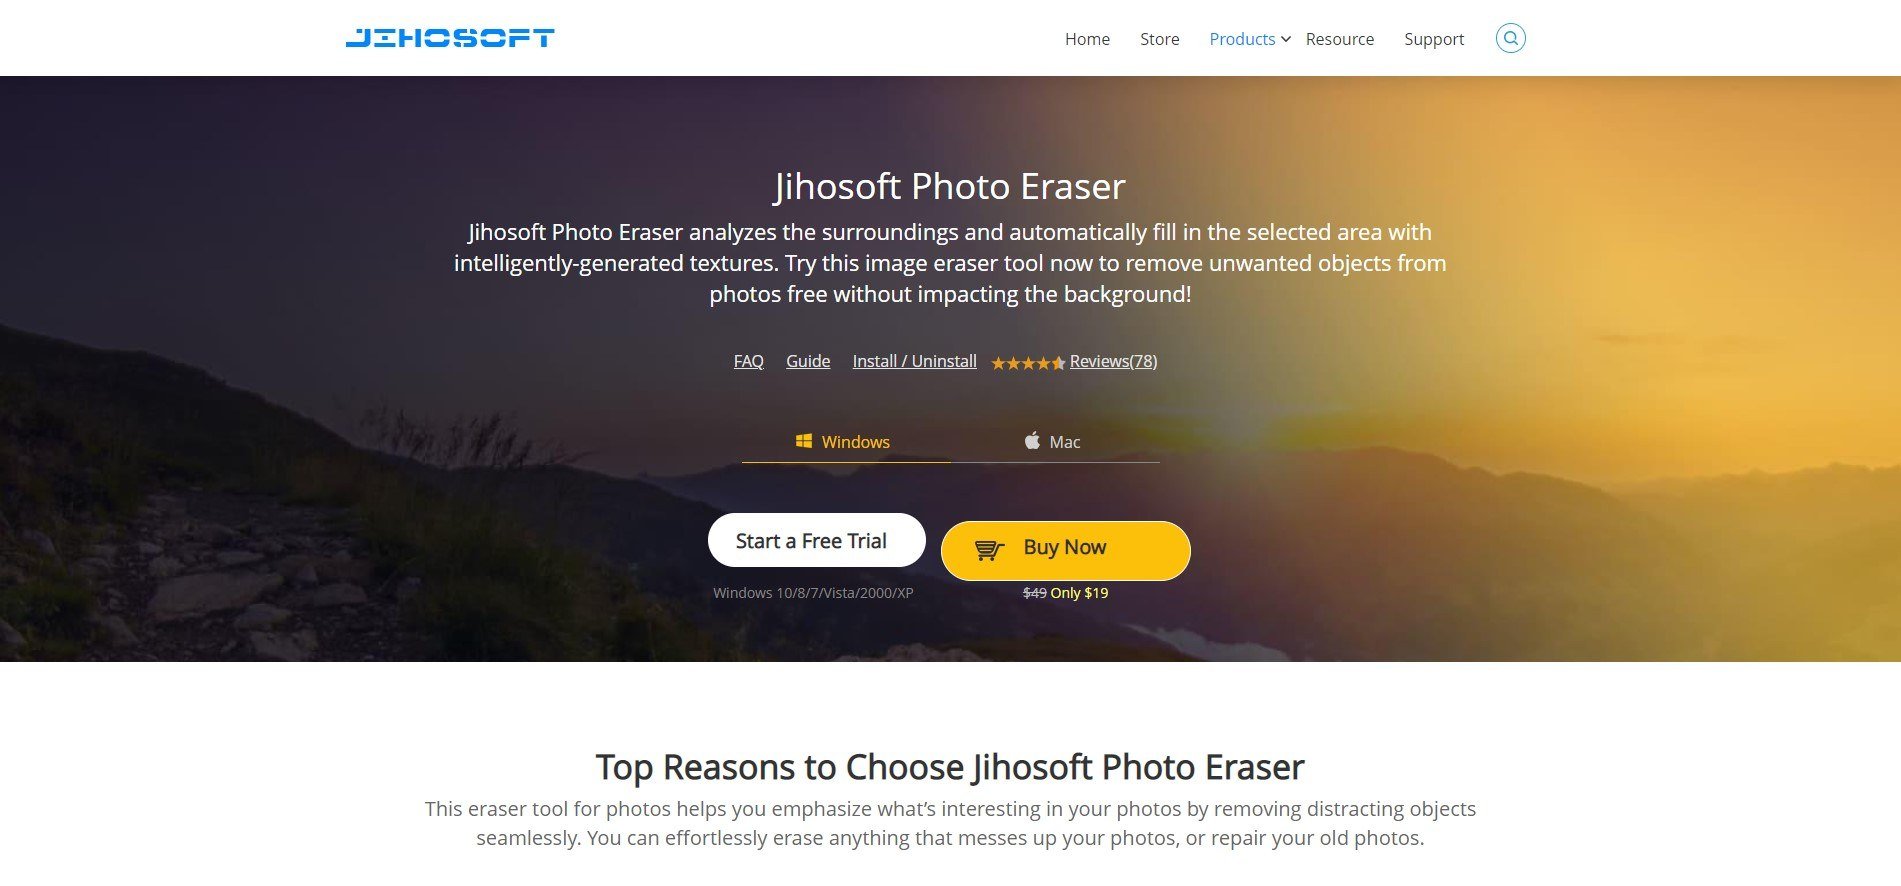 jihosoft eraser home page